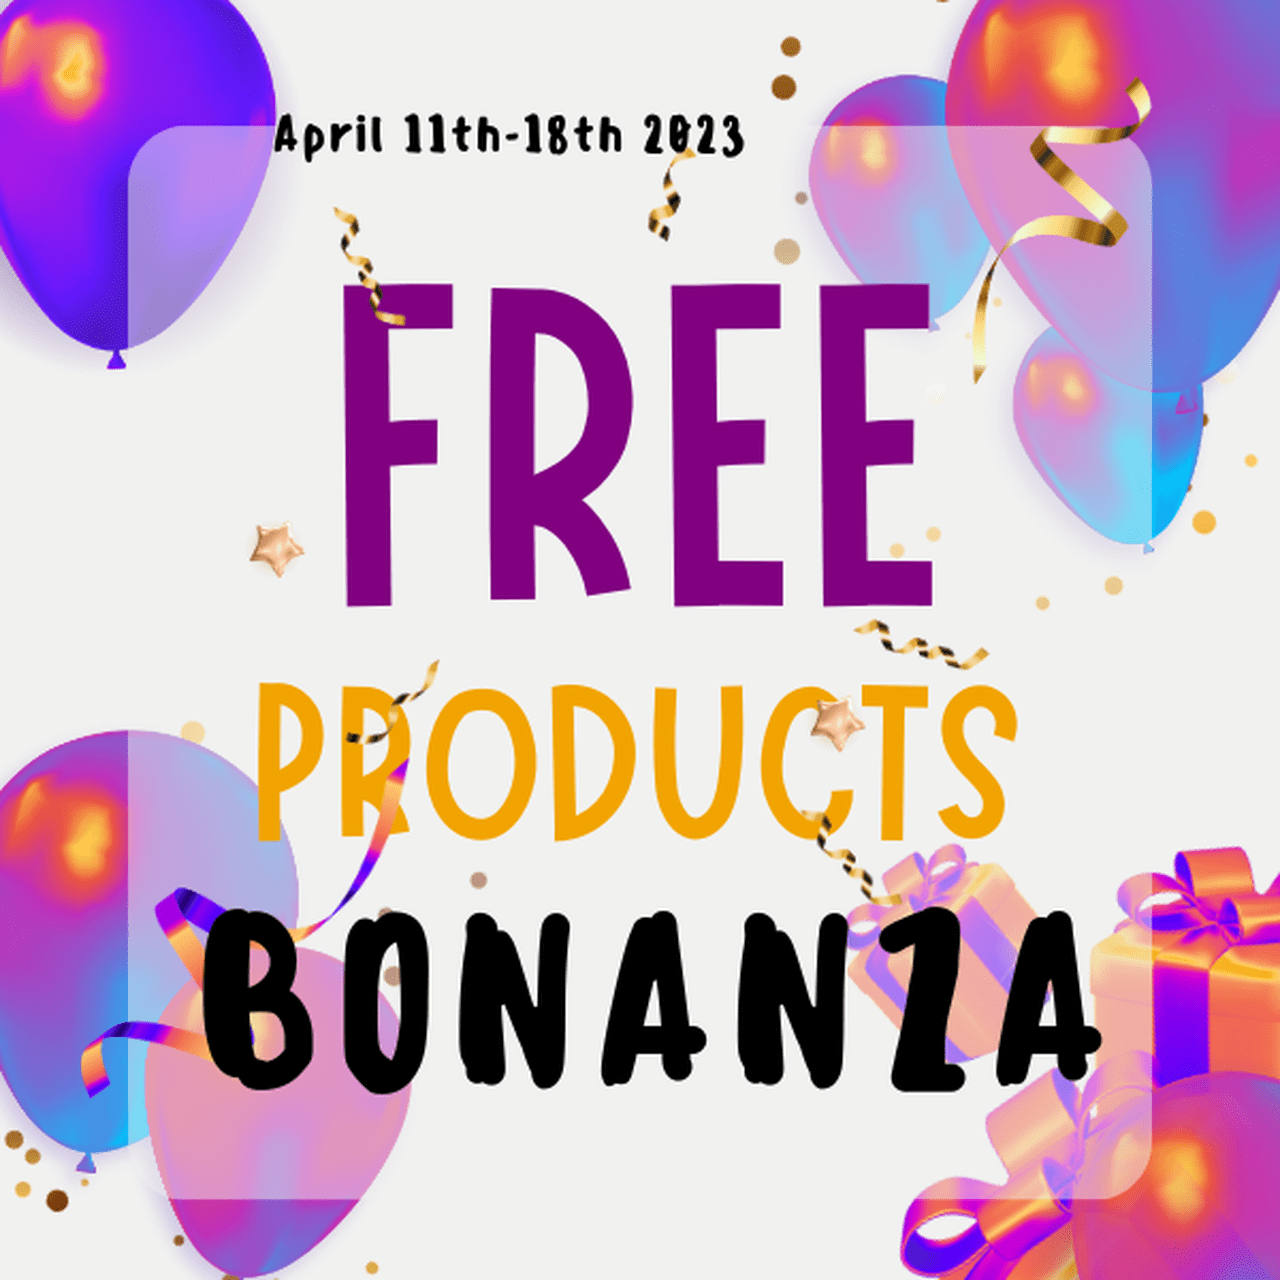 free products bonanza